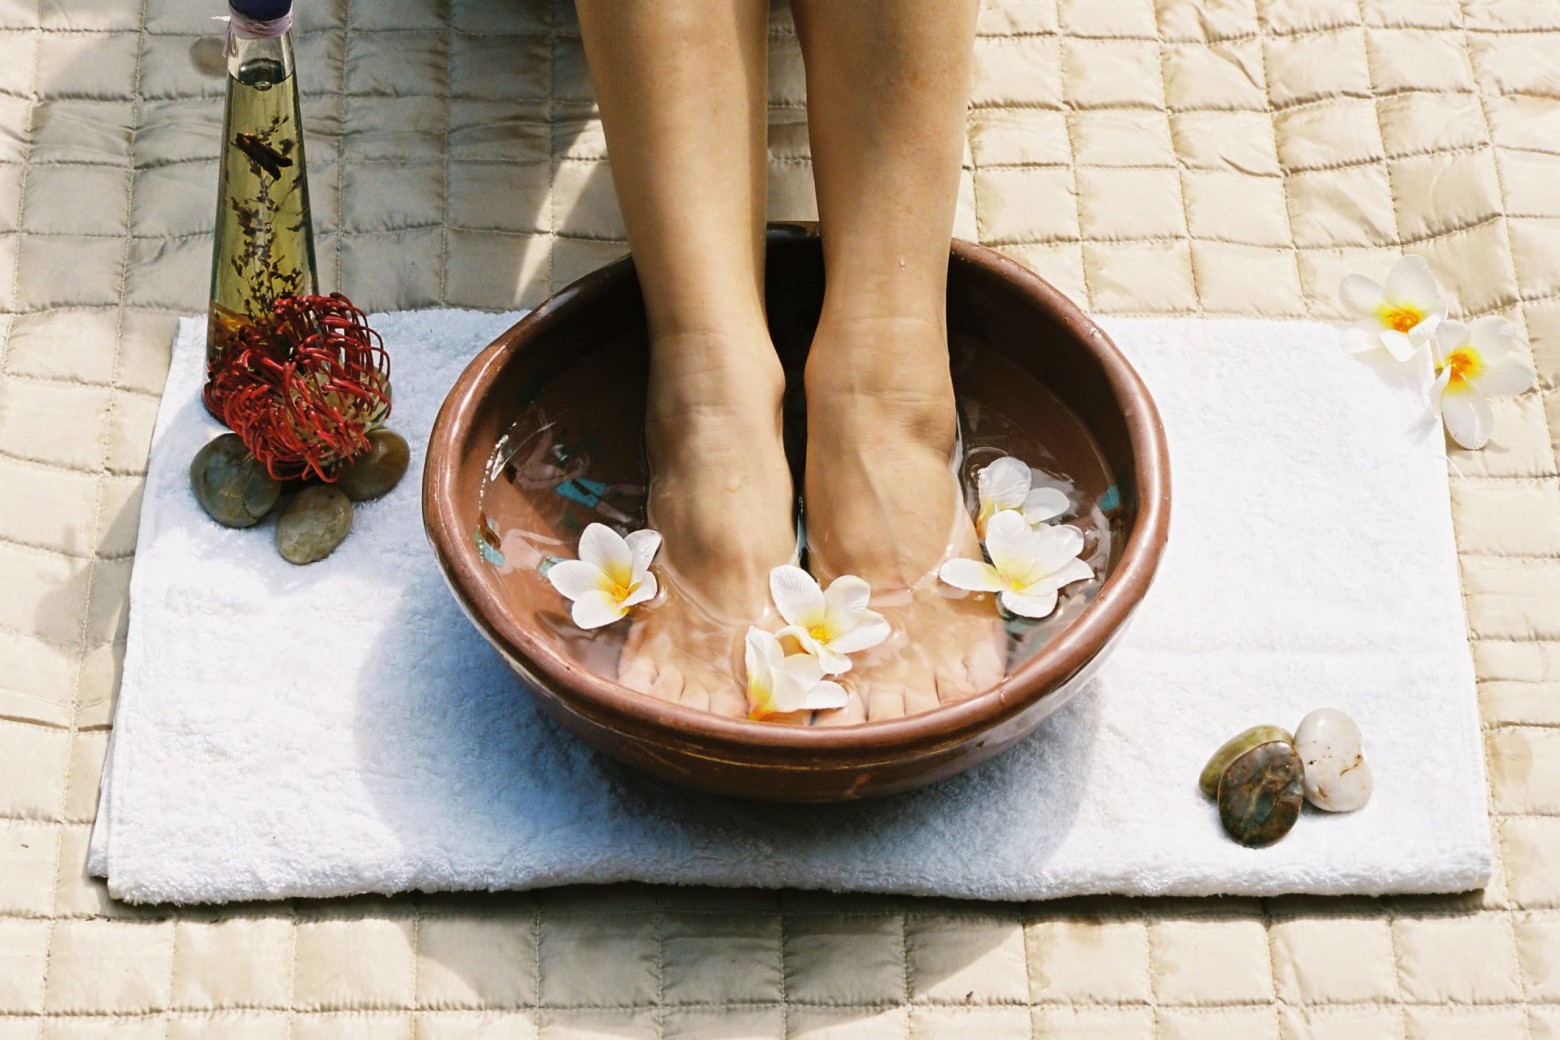 A magical foot bath can be created with a spiritual oil